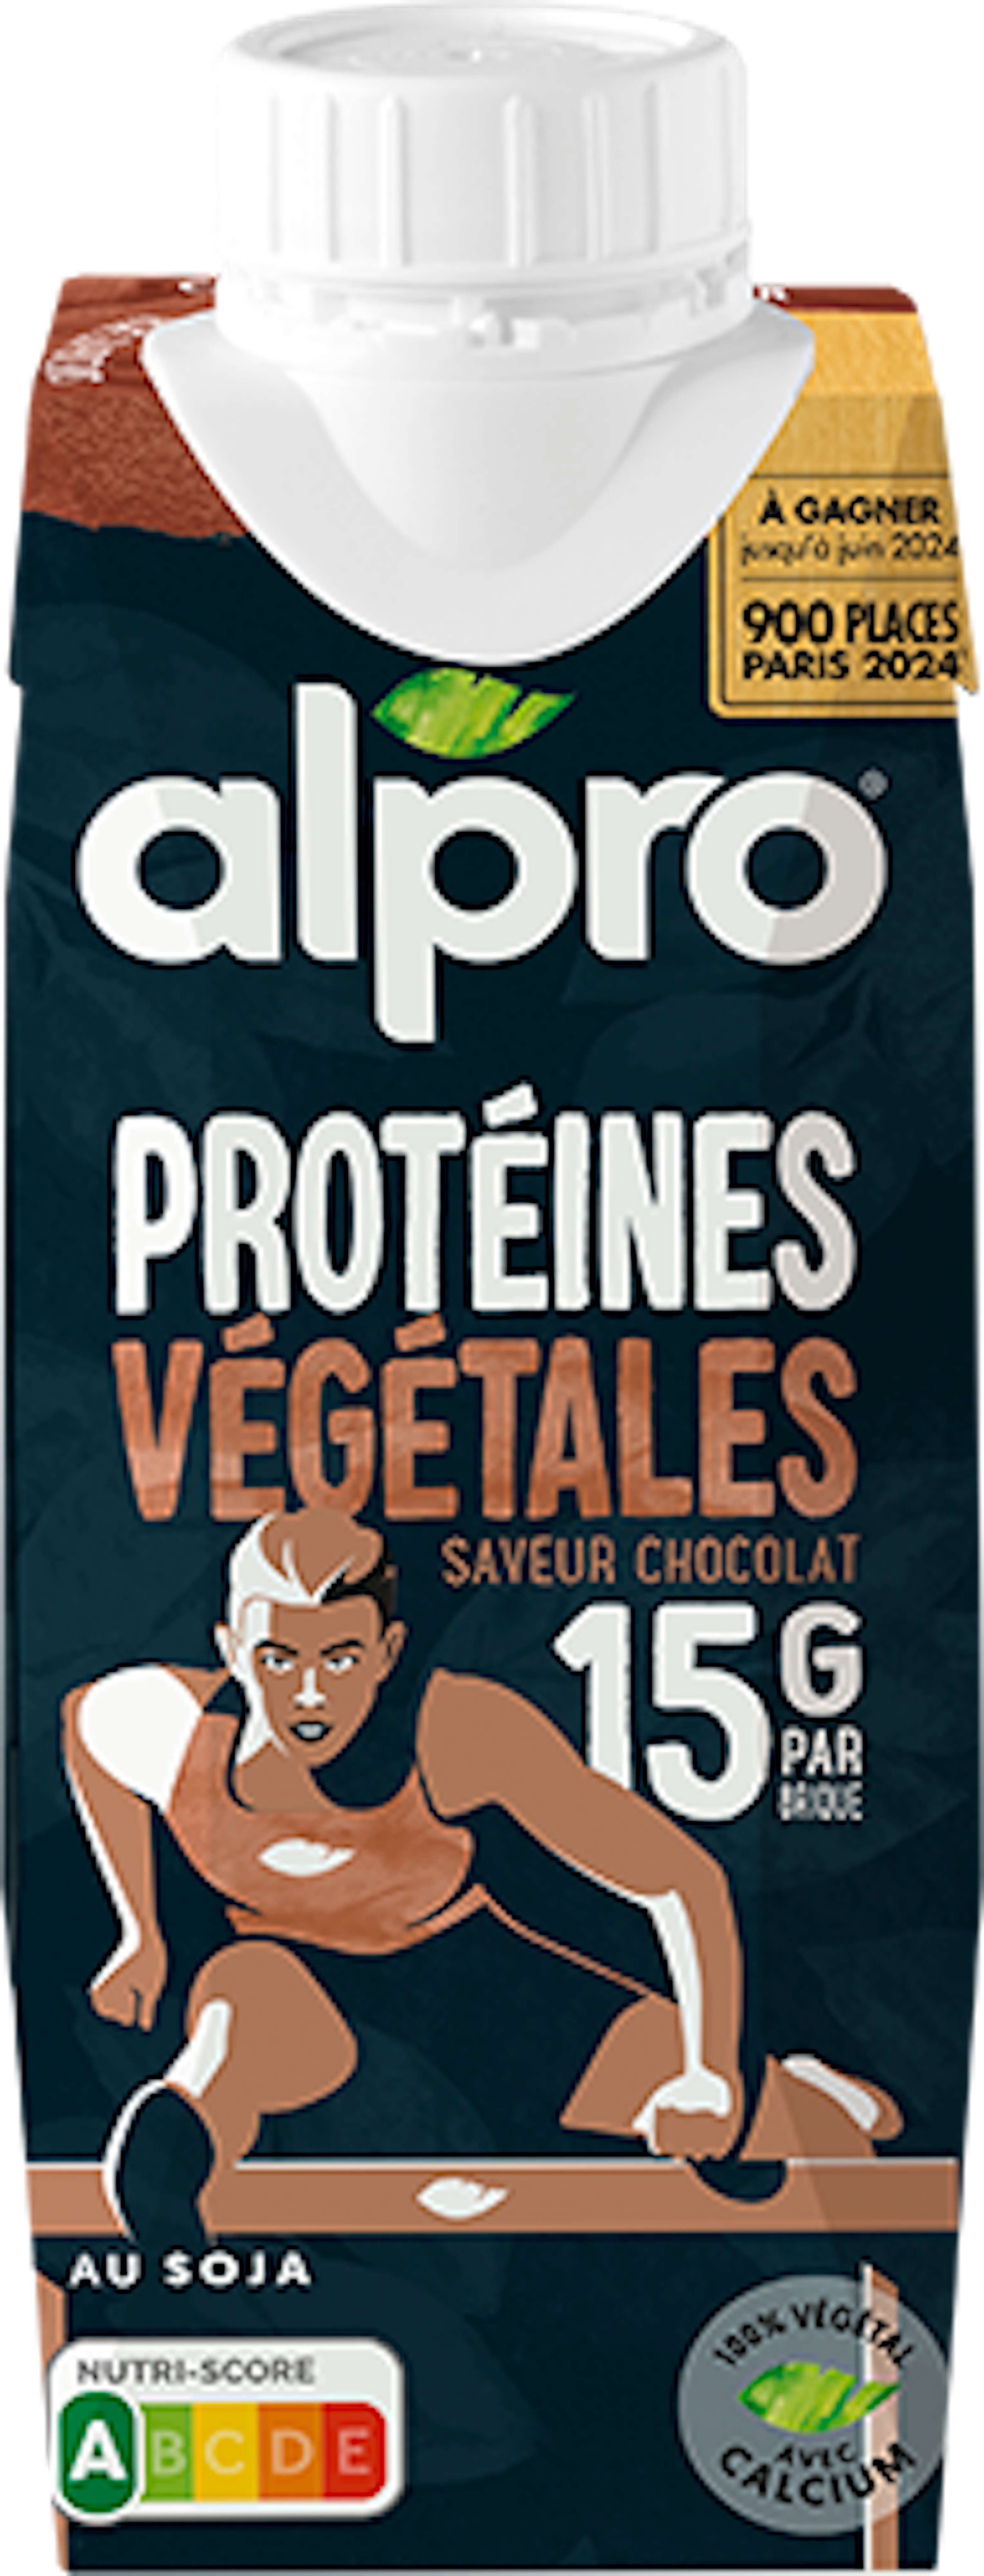 Protéines végétales saveur chocolat